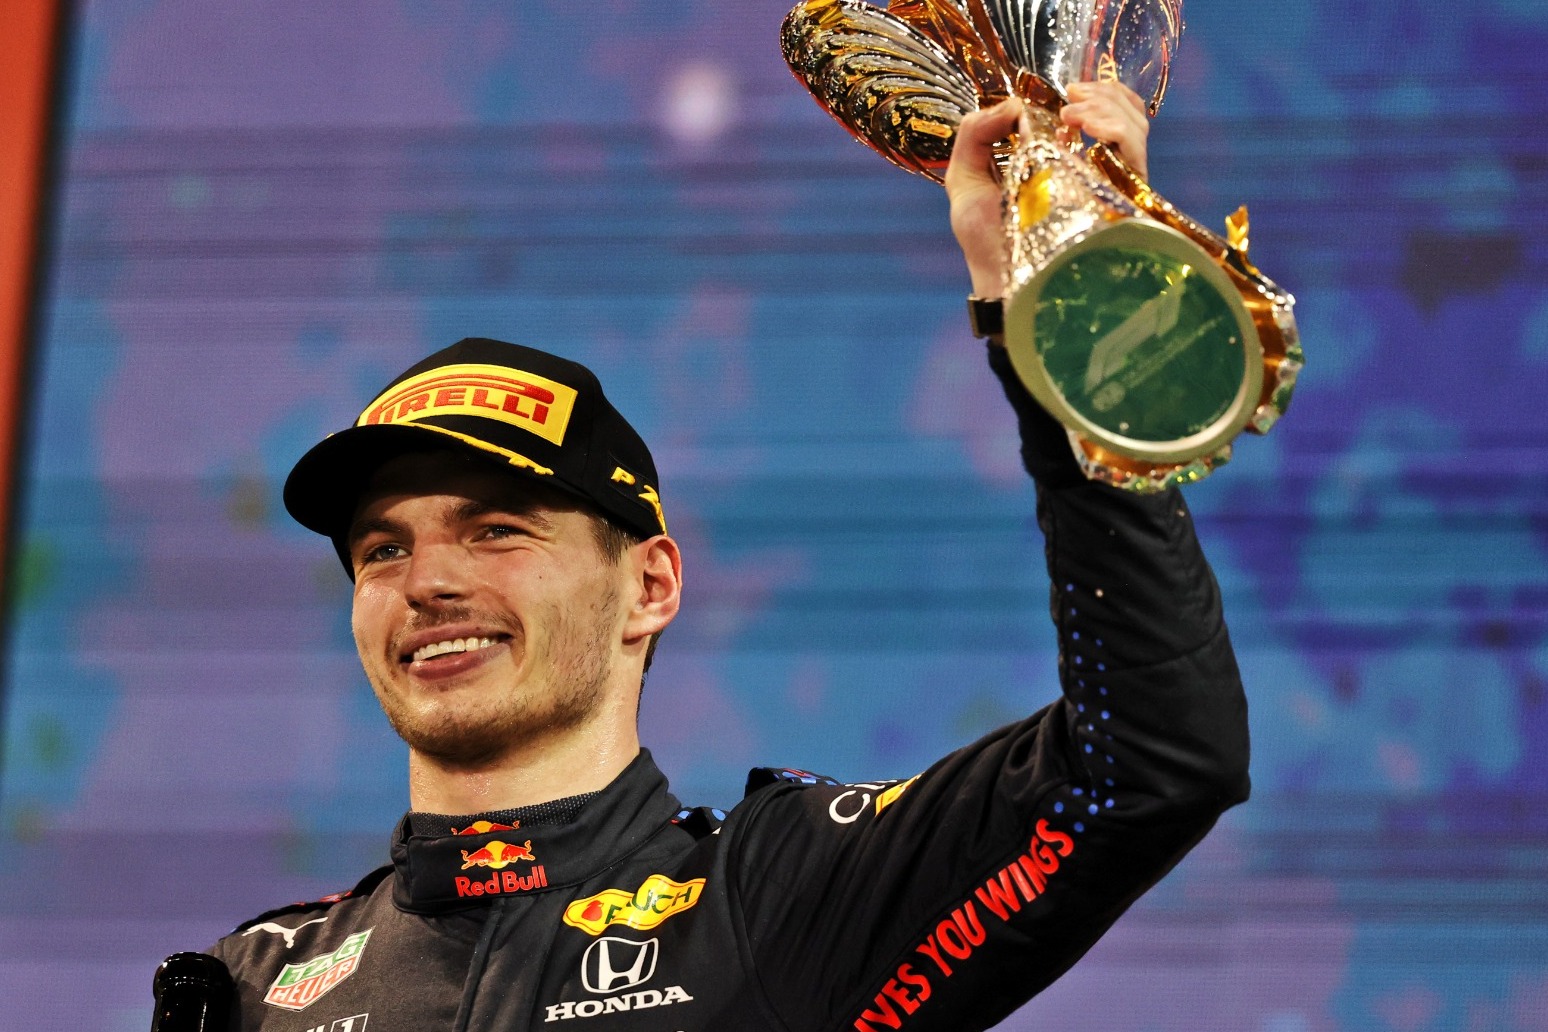 Max Verstappen pips Charles Leclerc to win thrilling Saudi Arabian Grand Prix 